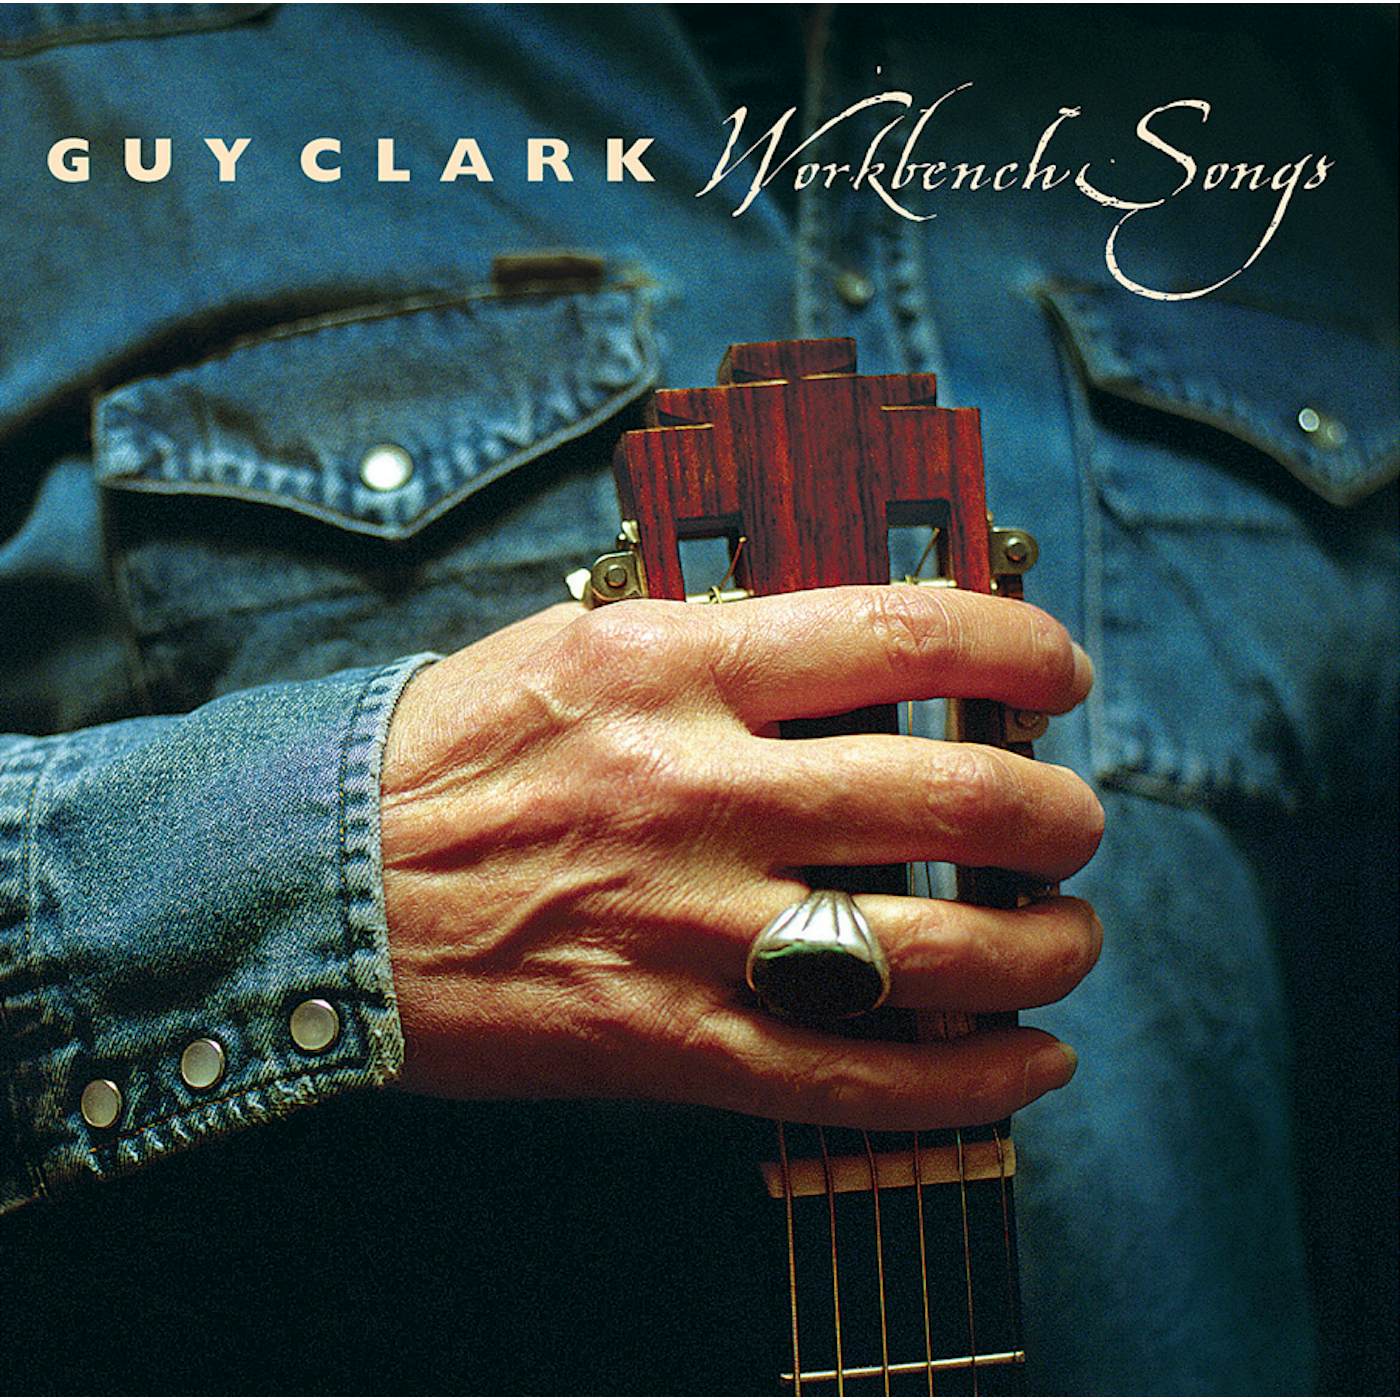 Guy Clark WORKBENCH SONGS CD